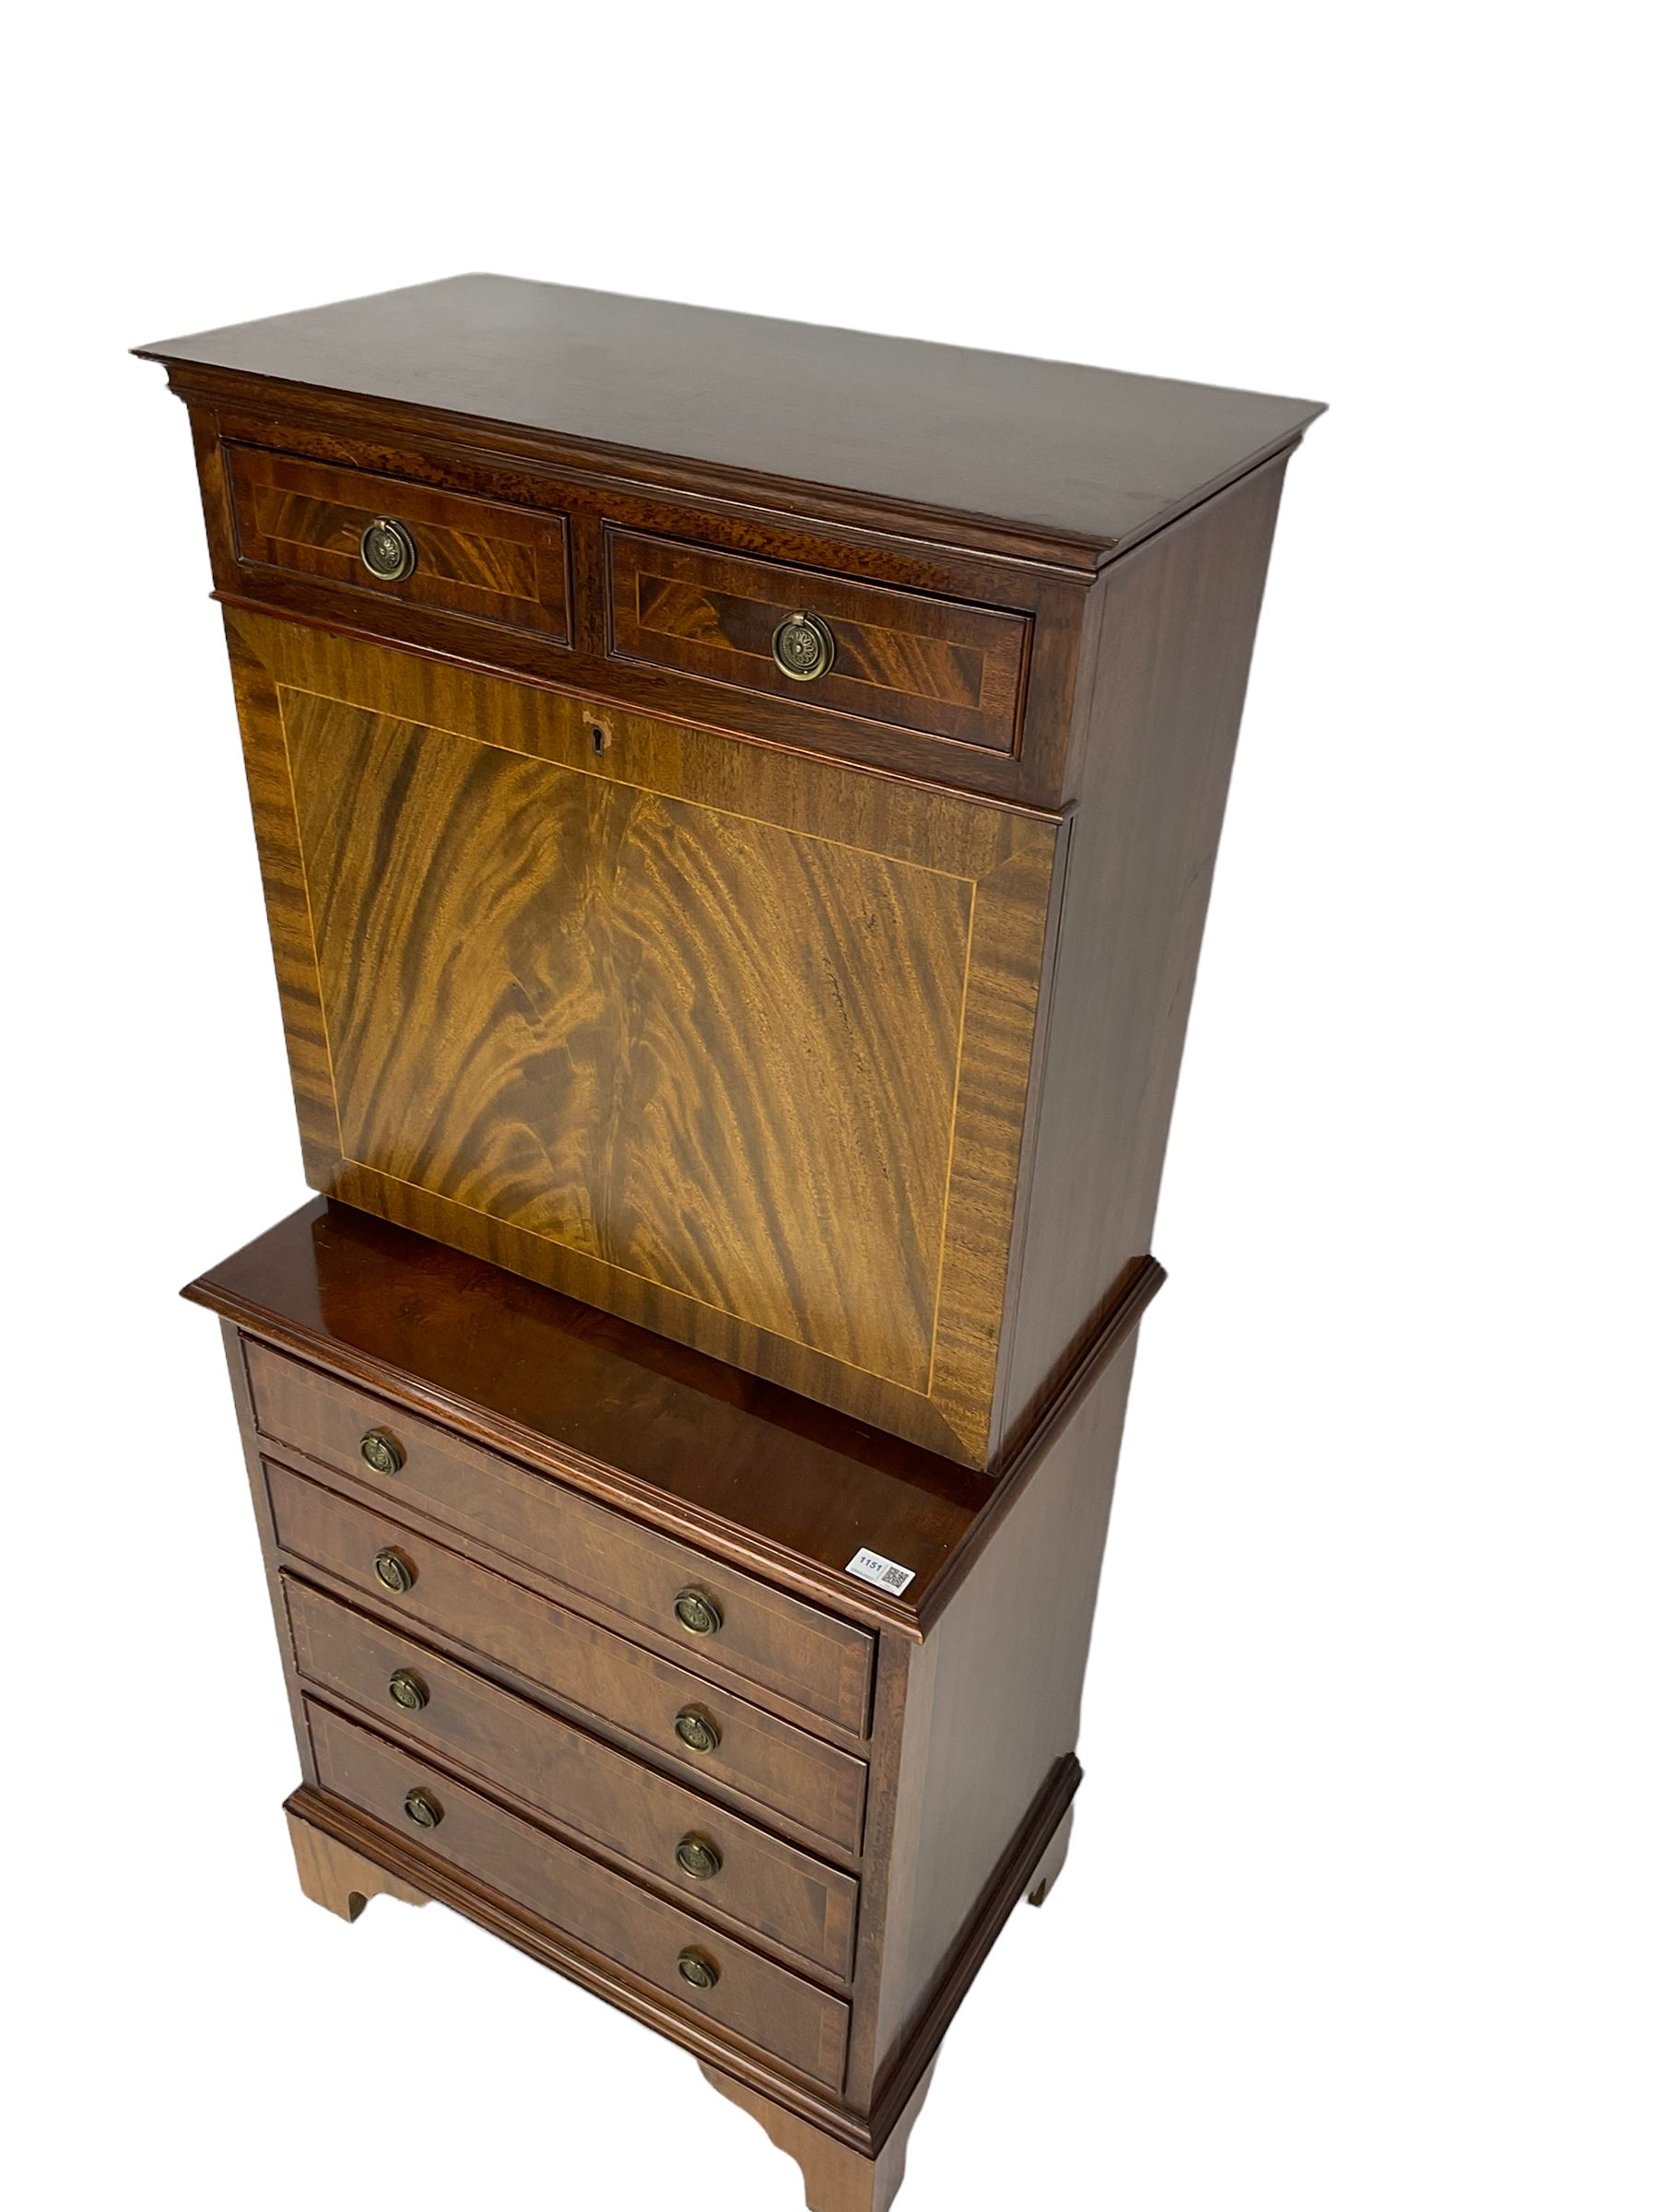 Shaw of London - mahogany secretaire chest - Image 4 of 8